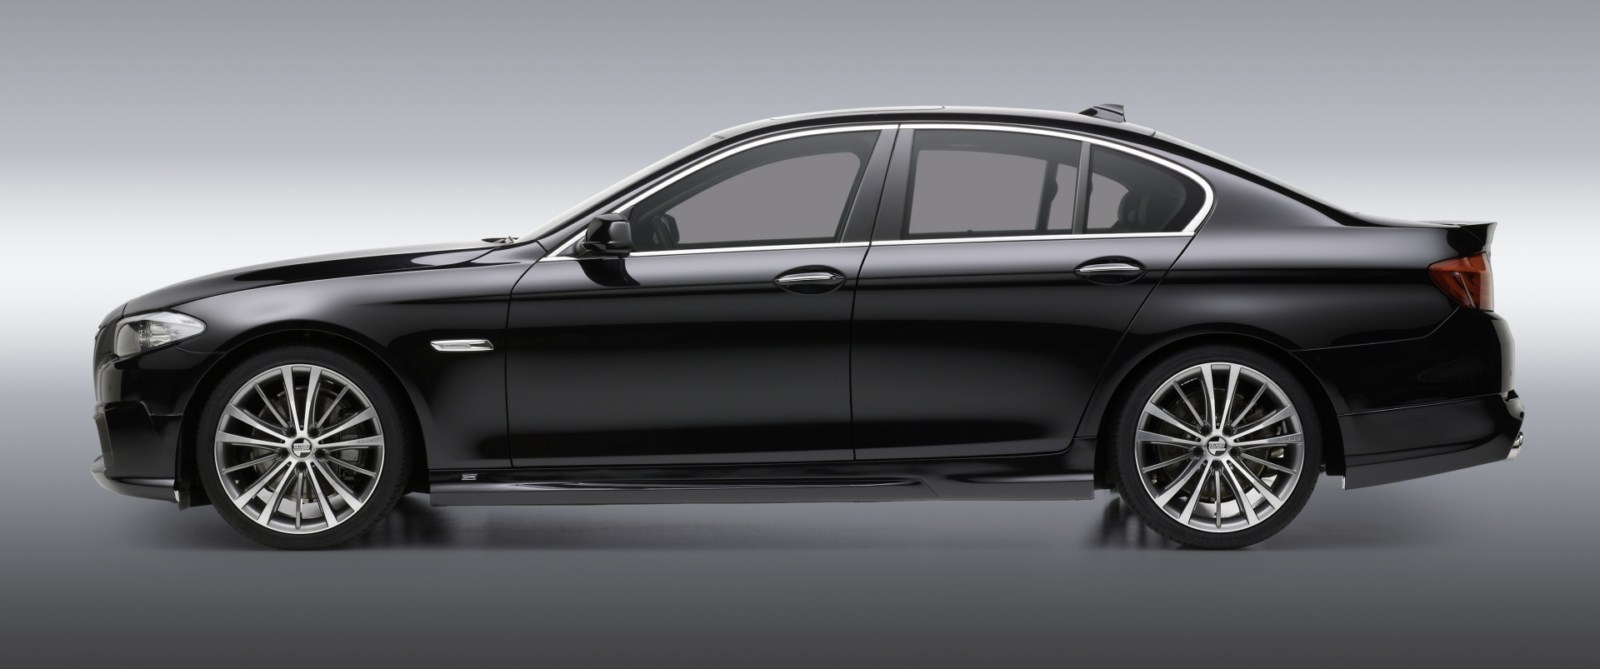 2023 BMW F10 535I Release